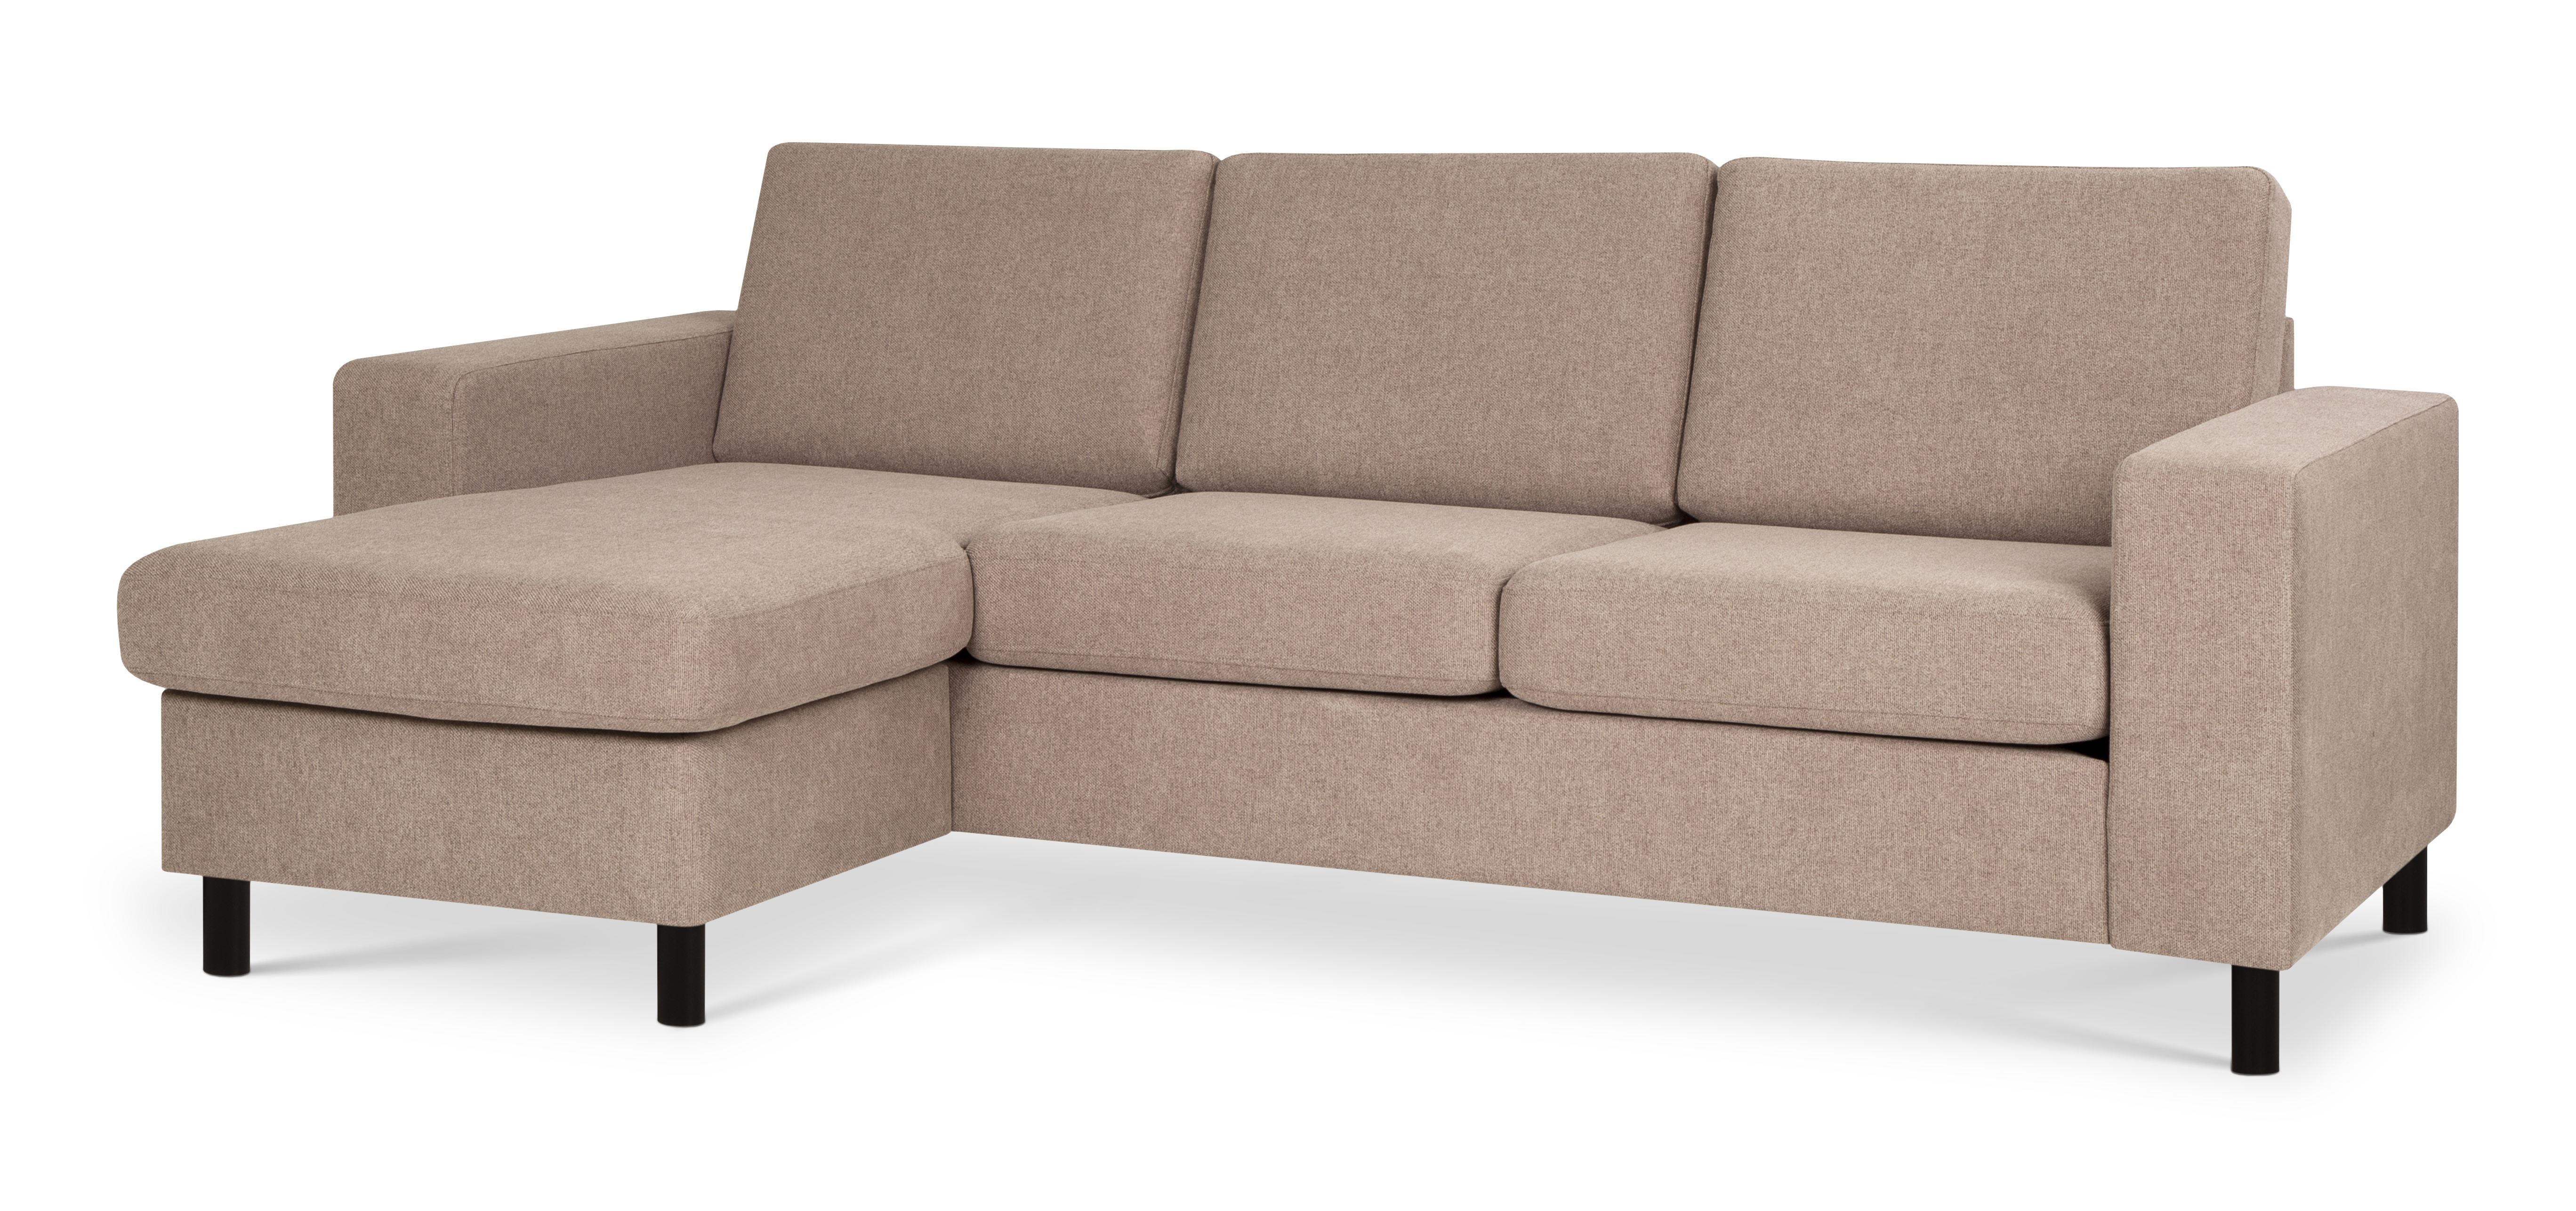 Pan set 1 3D sofa med chaiselong - antelope beige polyester stof og sort træ